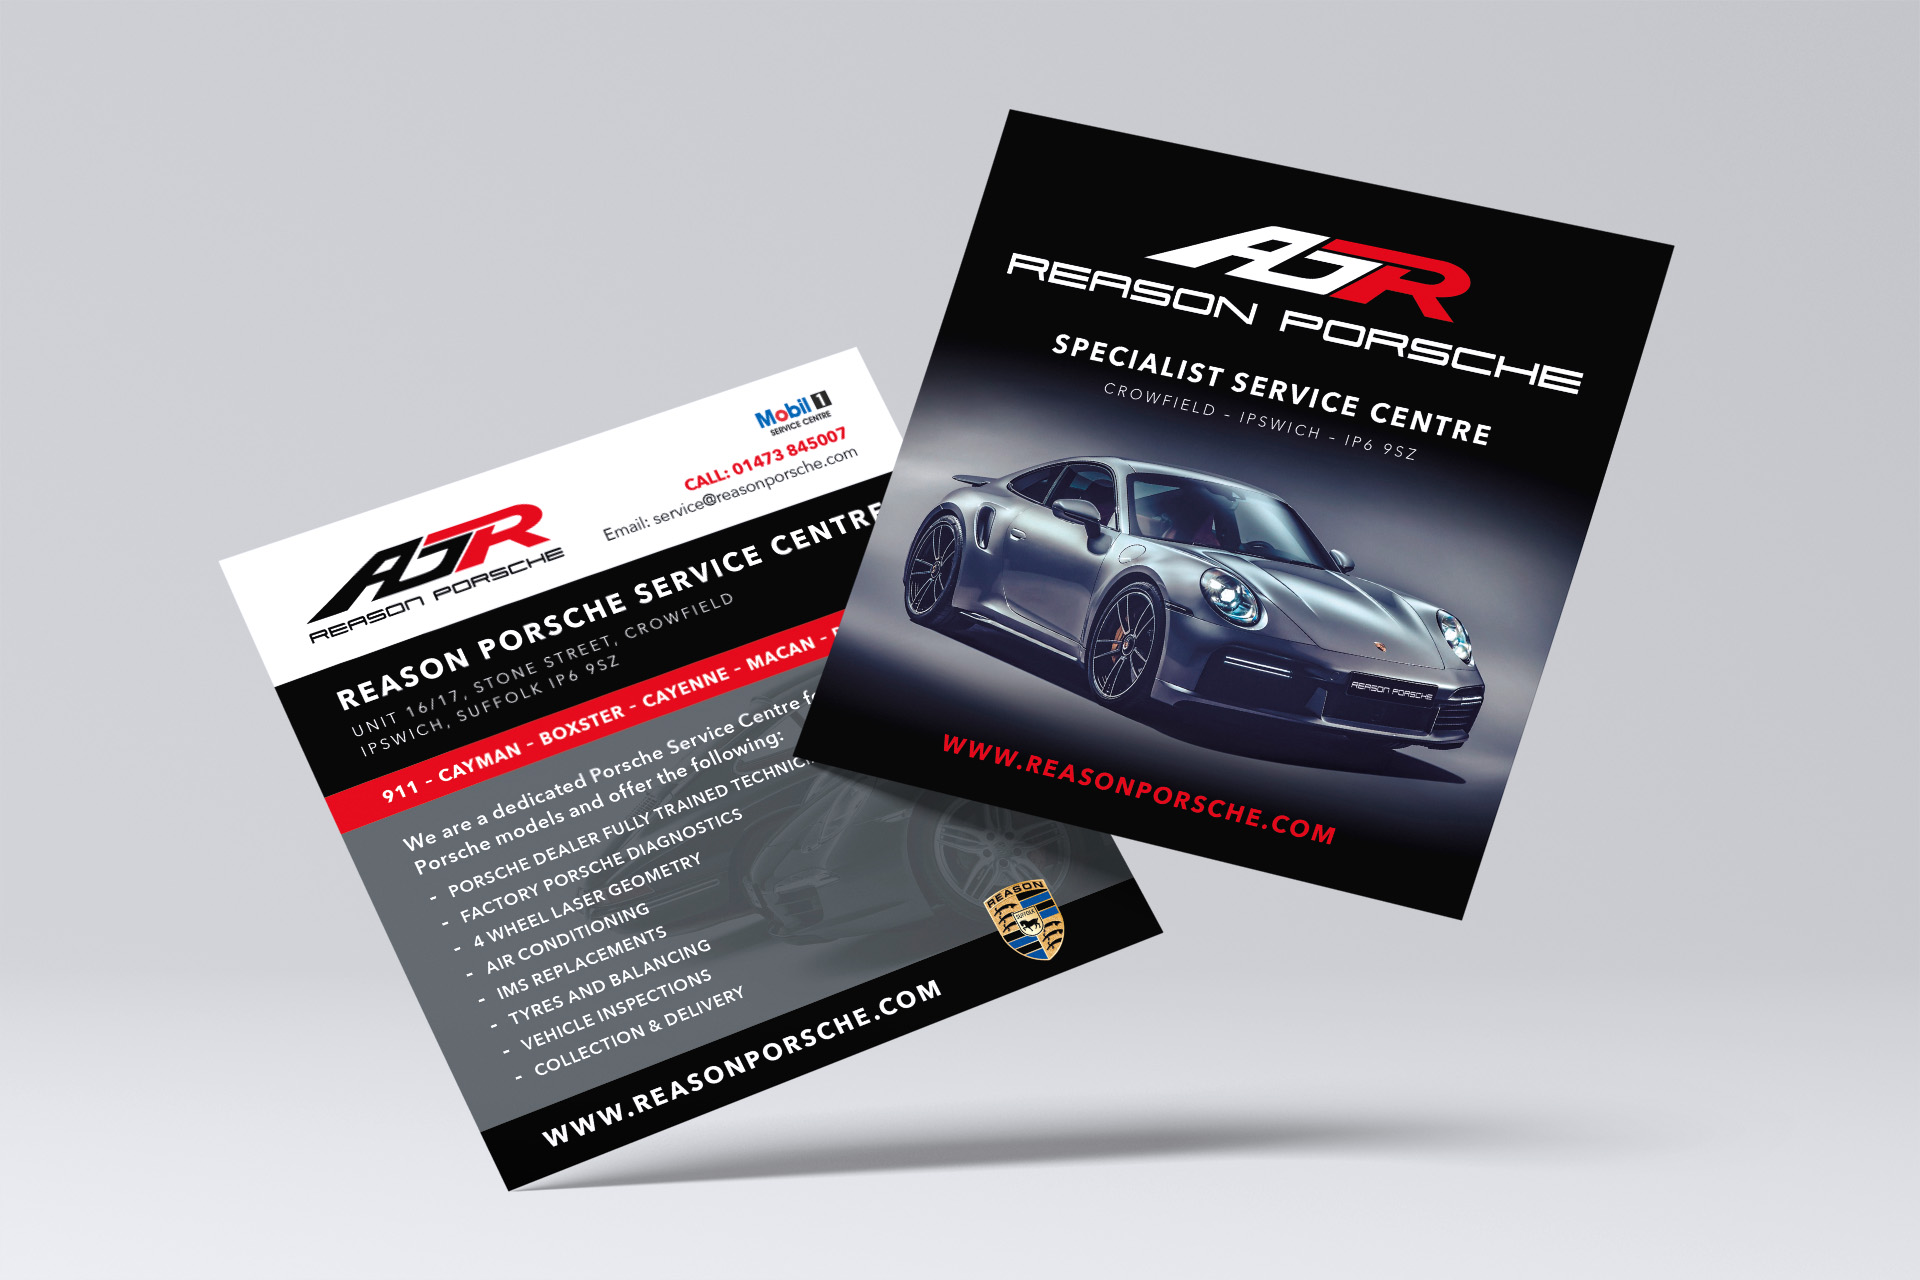 Reason Porsche flyer graphic design and printing